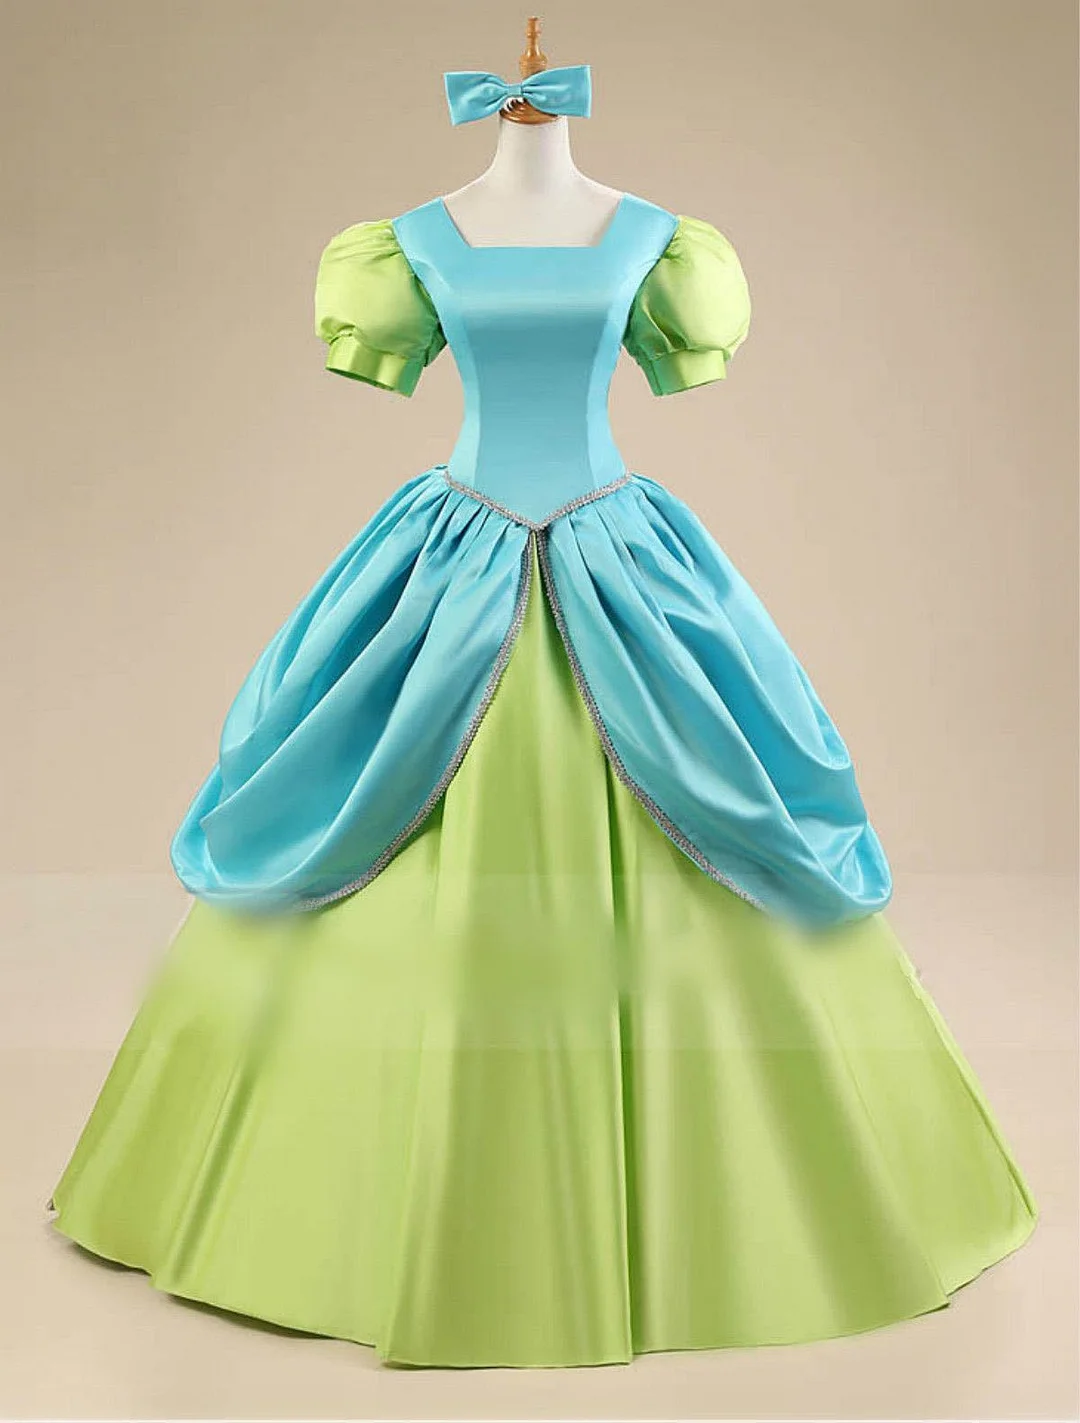 Cinderella Drizella Tremaine Cinderella's Stepsisters Cosplay Costume